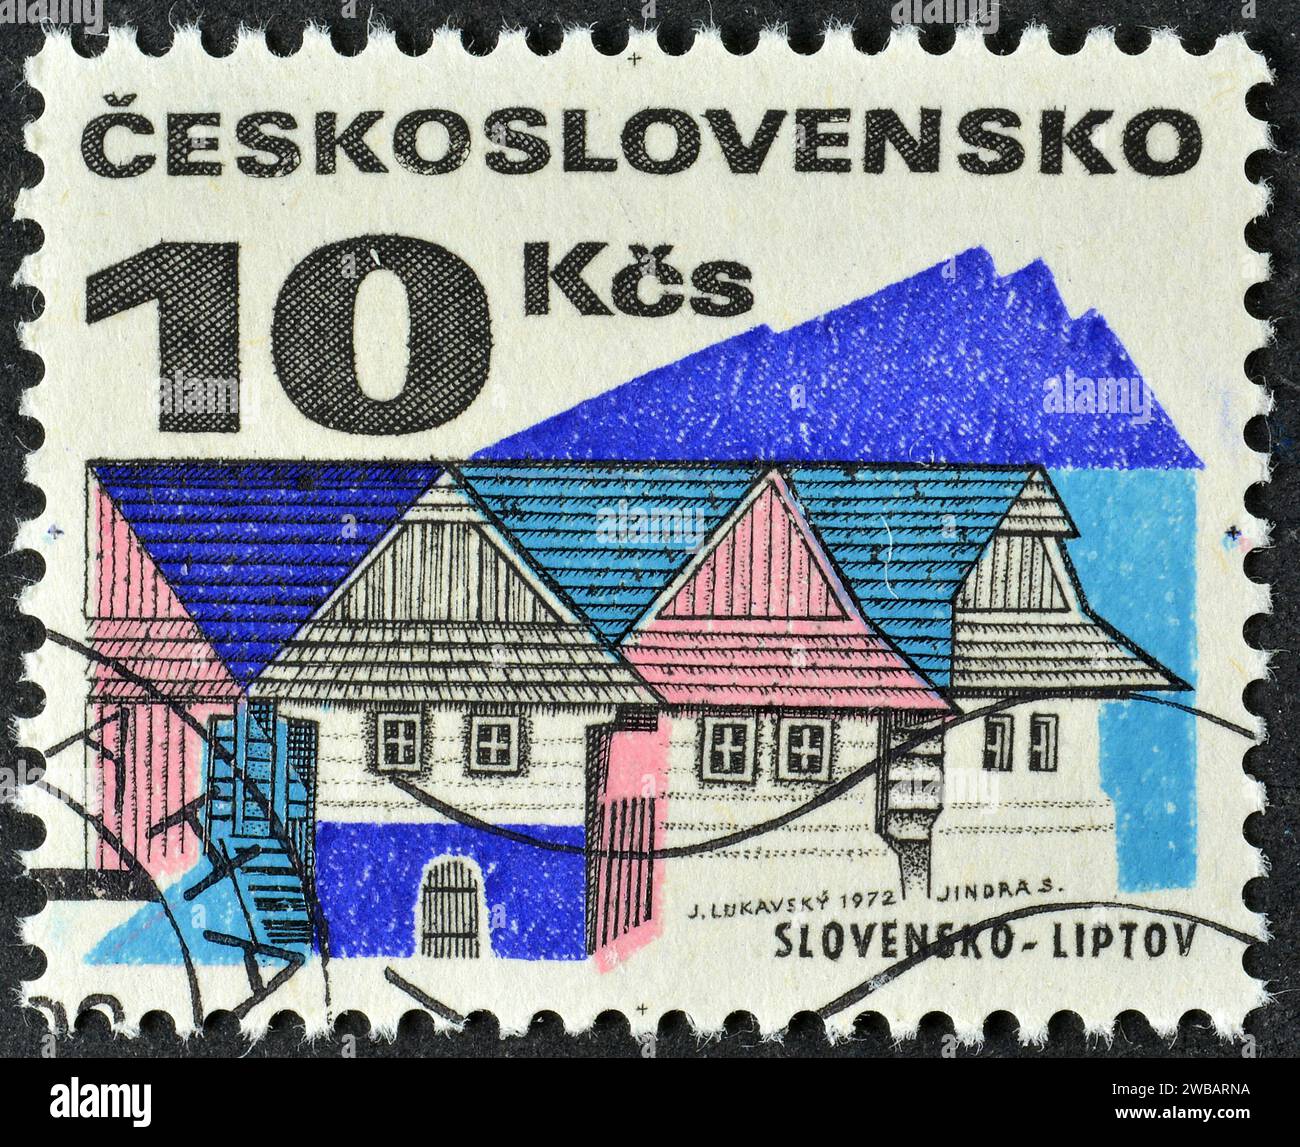 Cancelled postage stamp printed by Czechoslovakia, that shows Slovakia - Liptov, Folk Architecture of Slovakia, circa 1972. Stock Photo